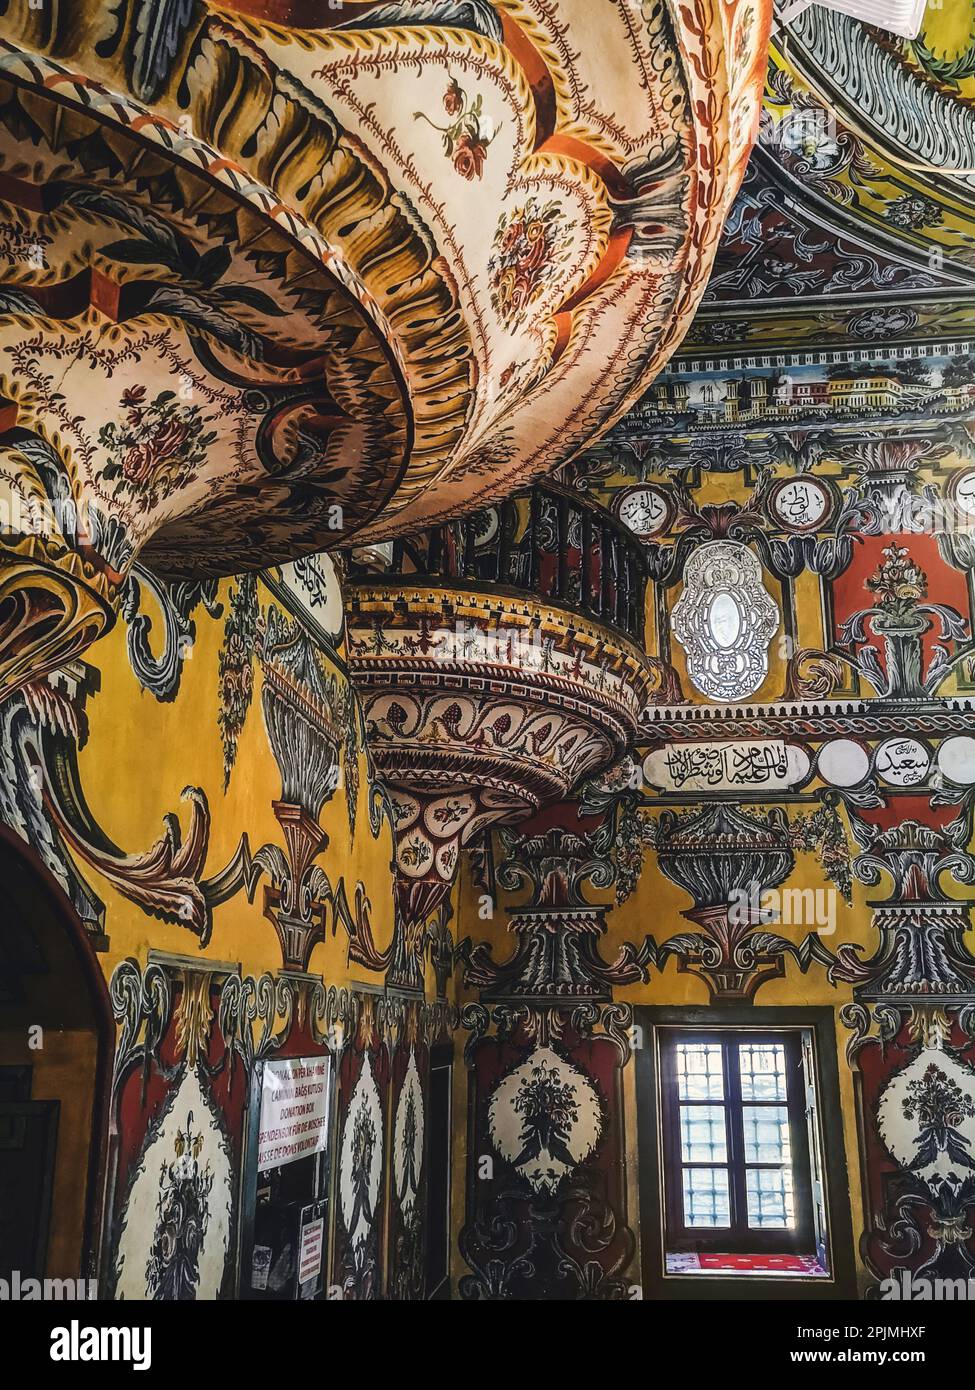 Moschea dipinta ornato interno con dipinti islamici Foto Stock